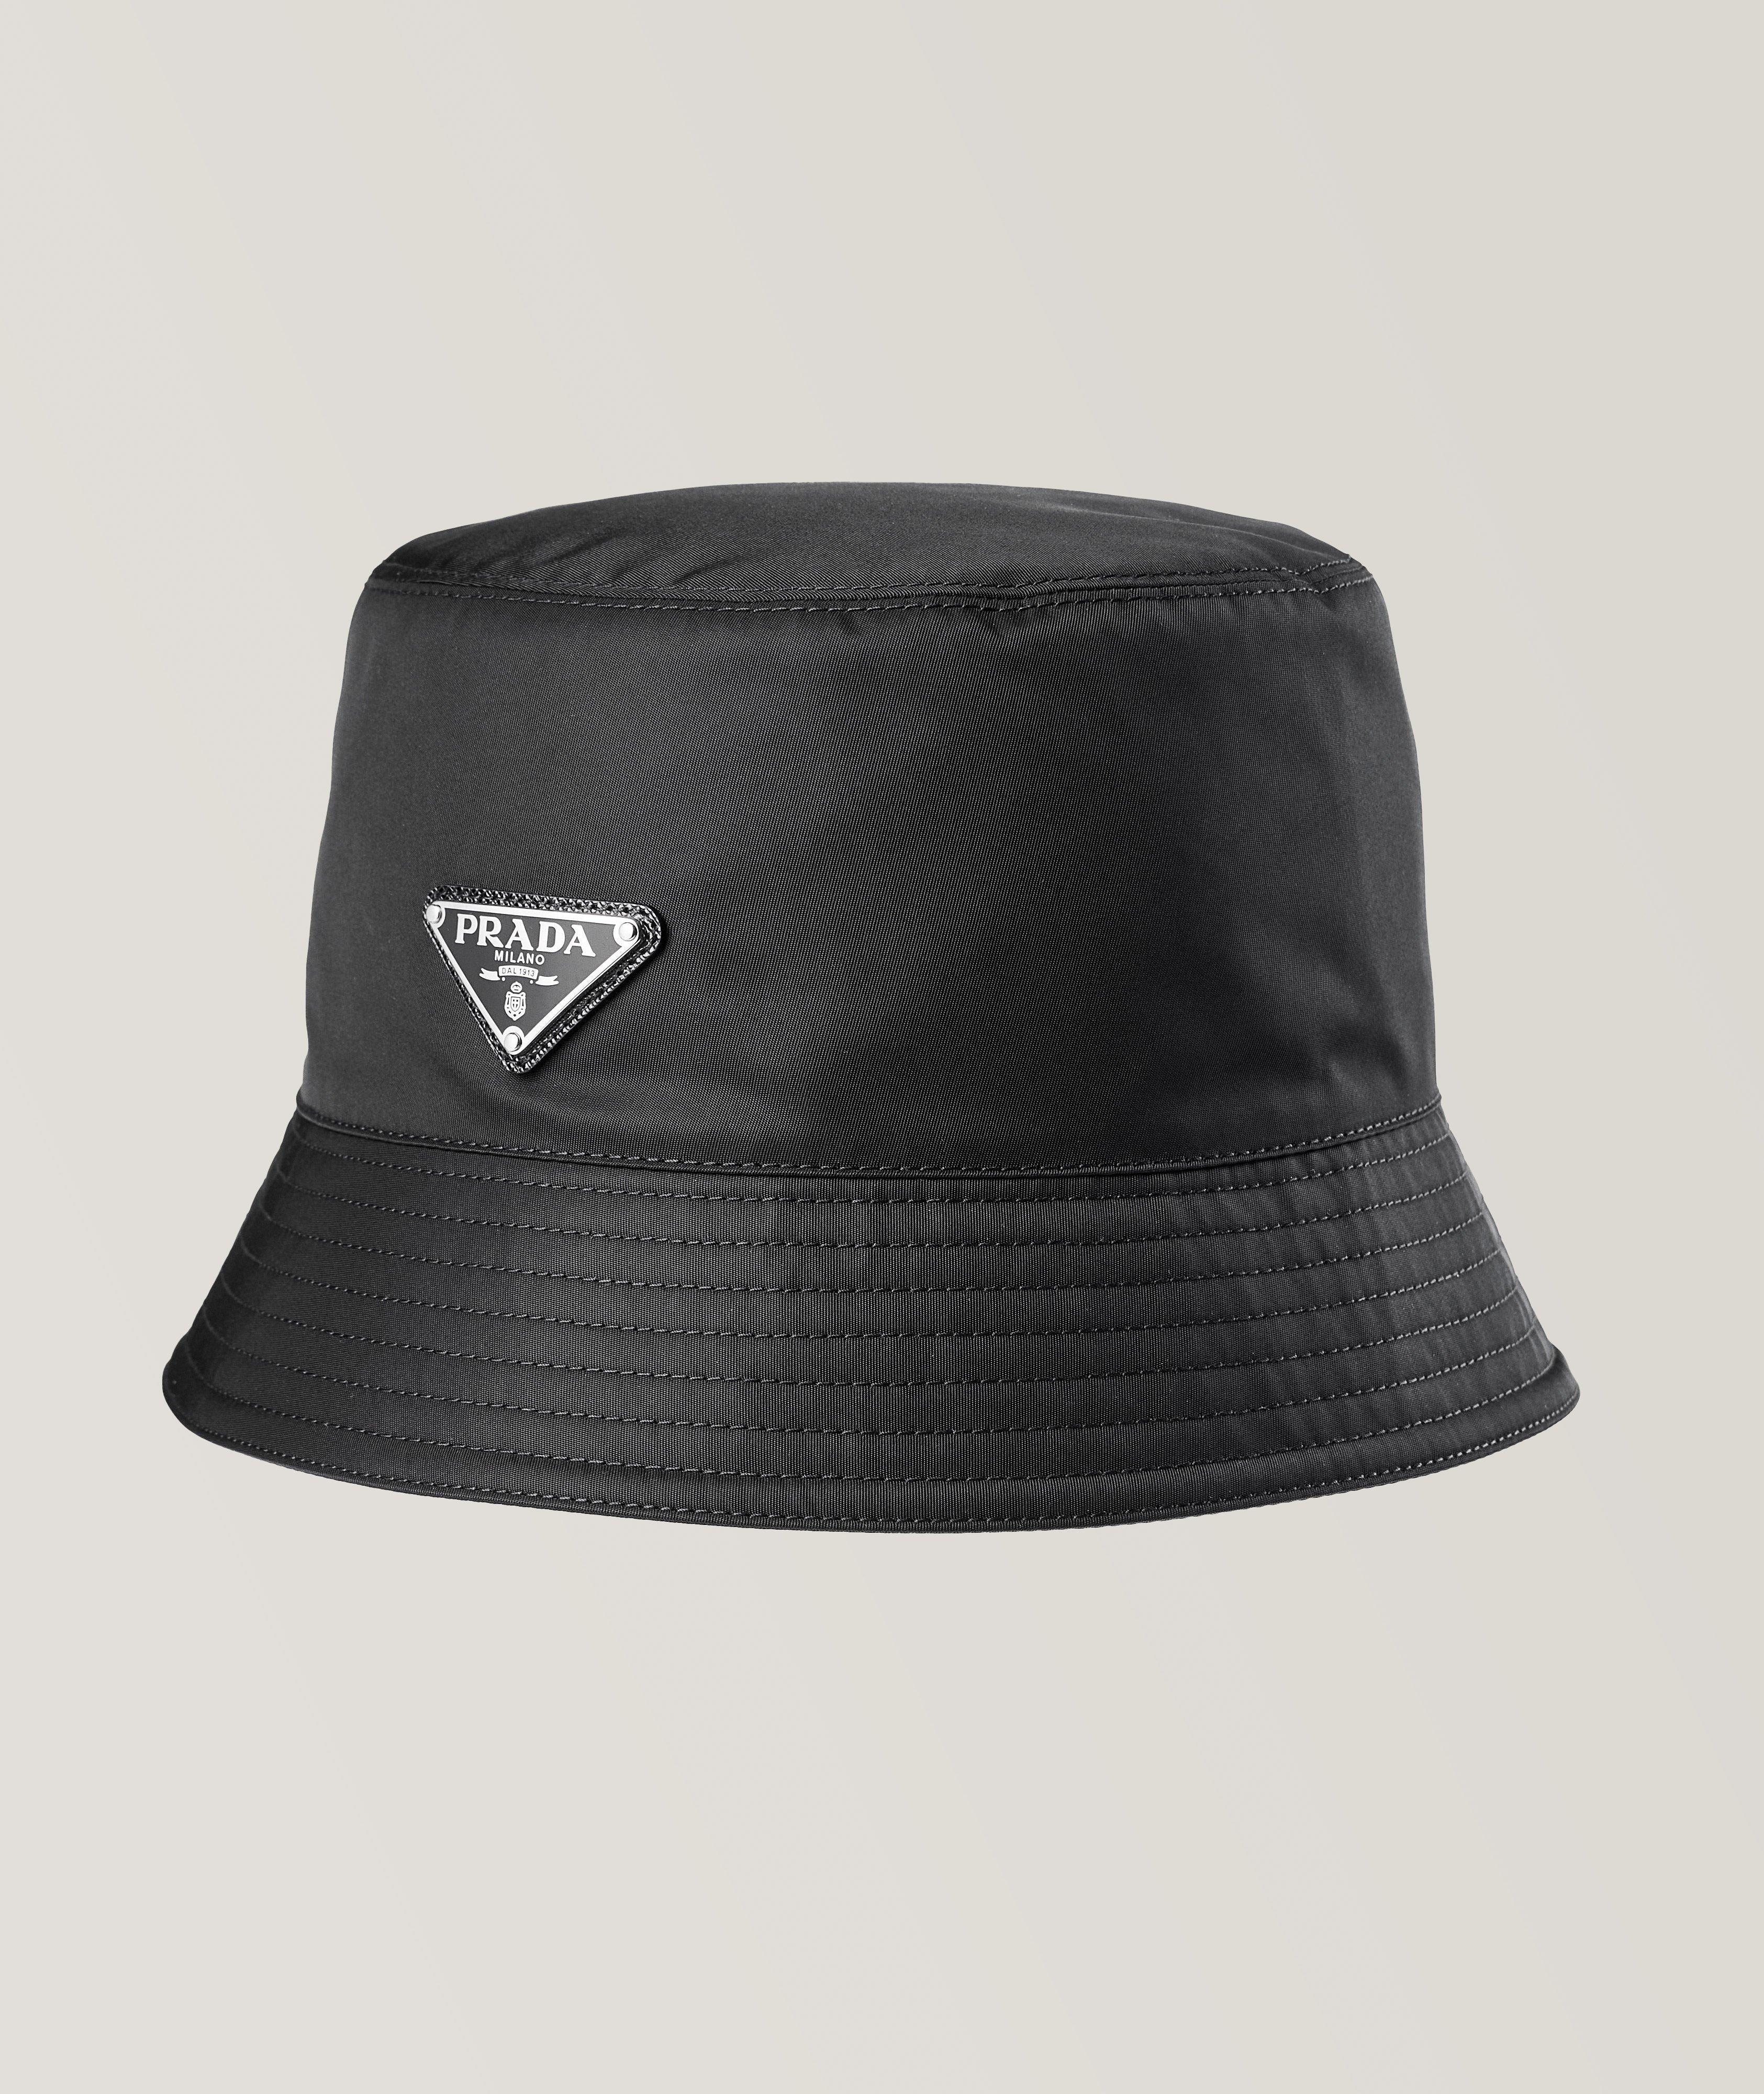 Prada Chapeau cloche en nylon recyclé avec logo